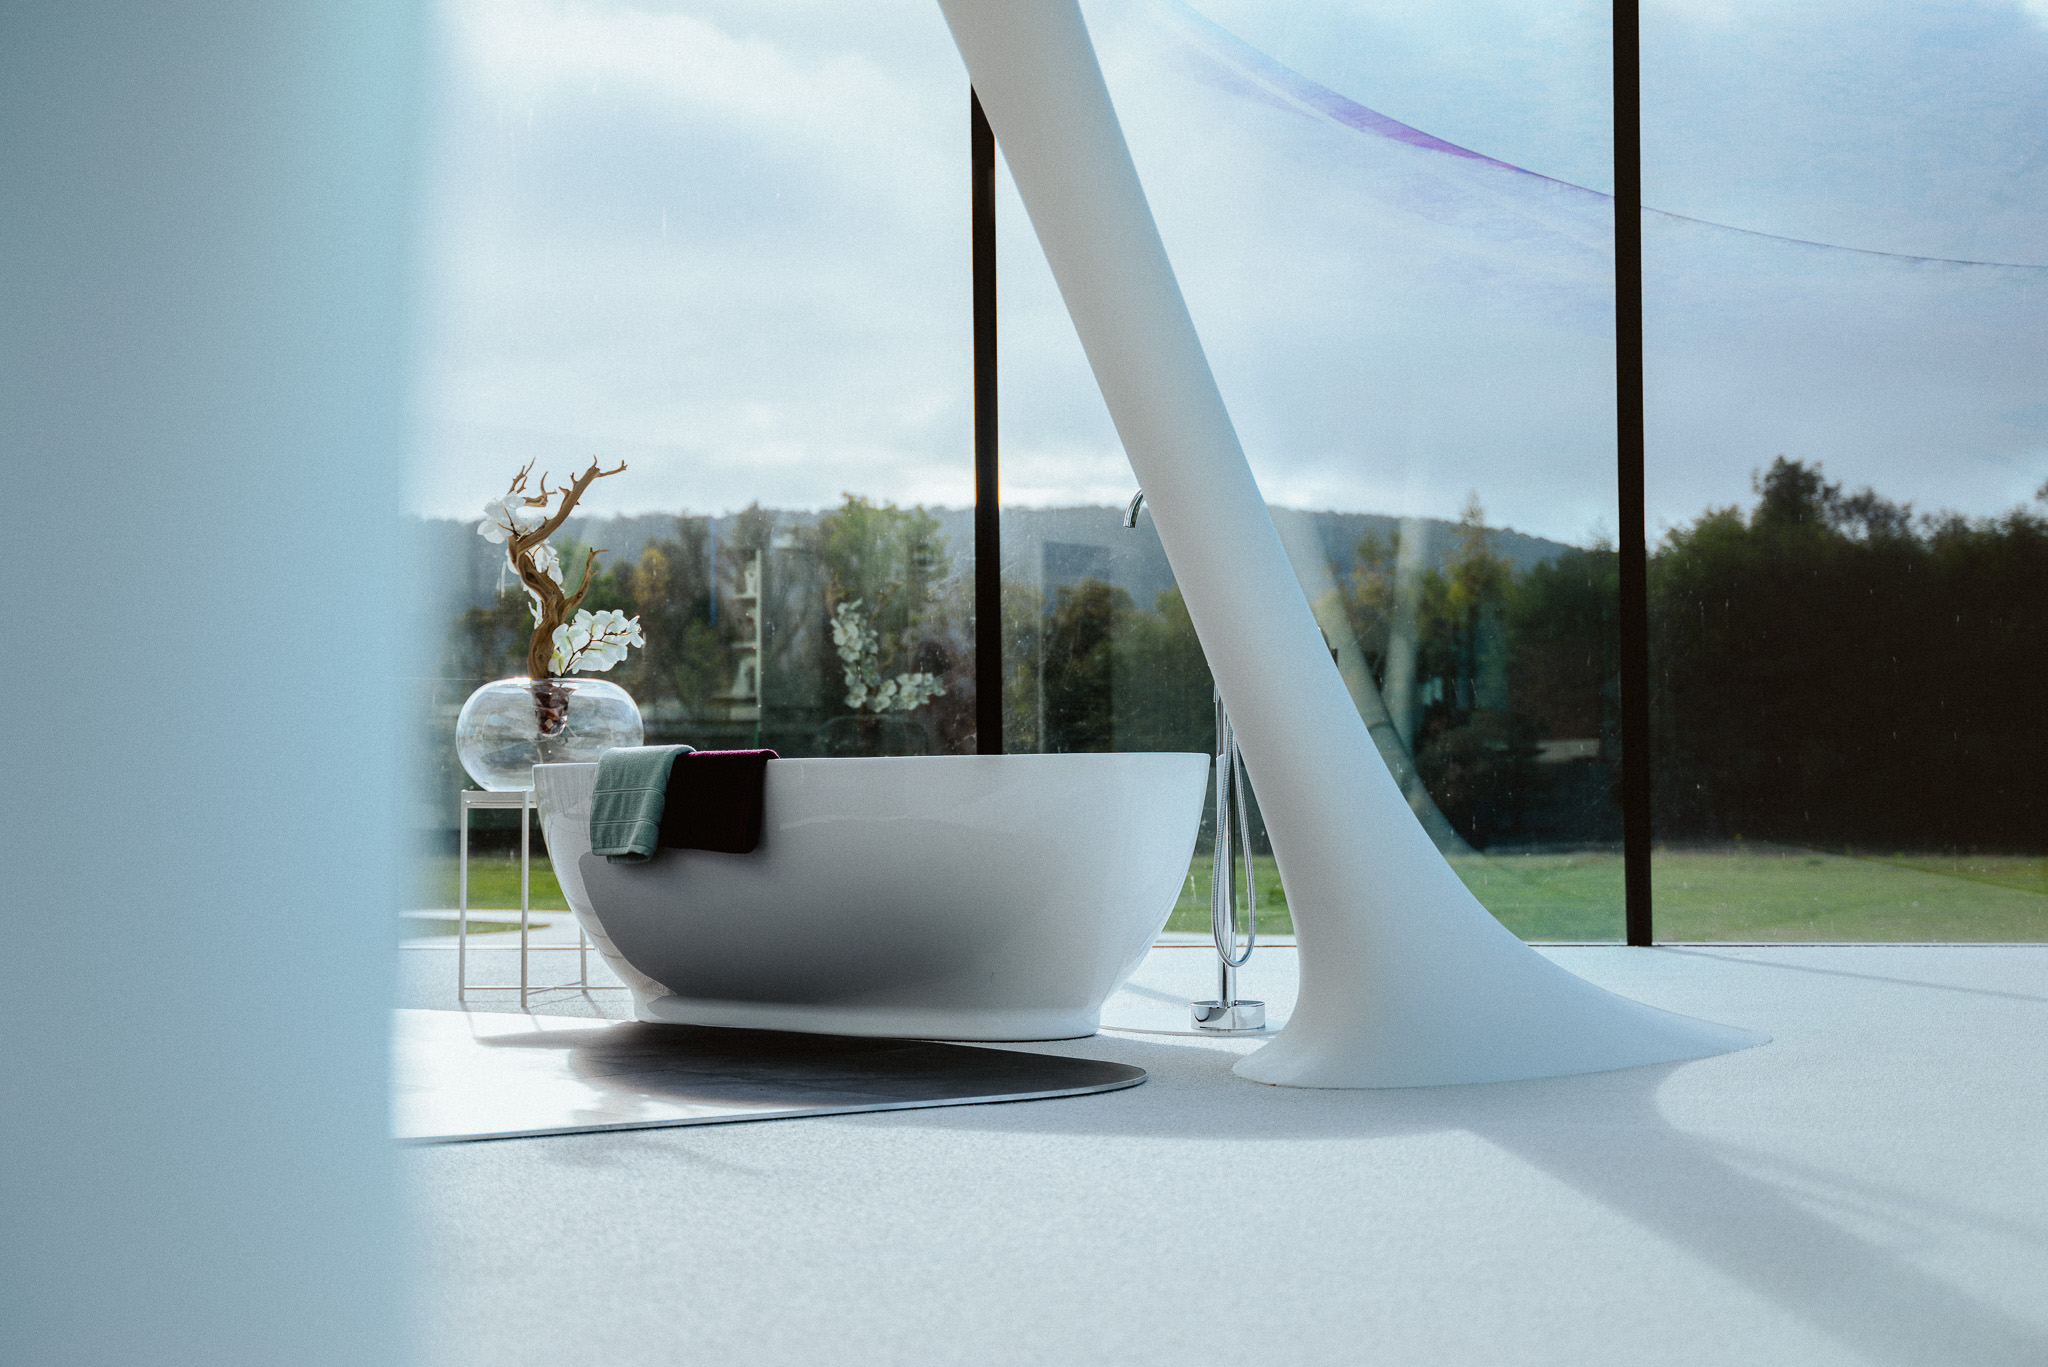 3deluxe S Leonardo Glass Cube In Germany Exhibitions